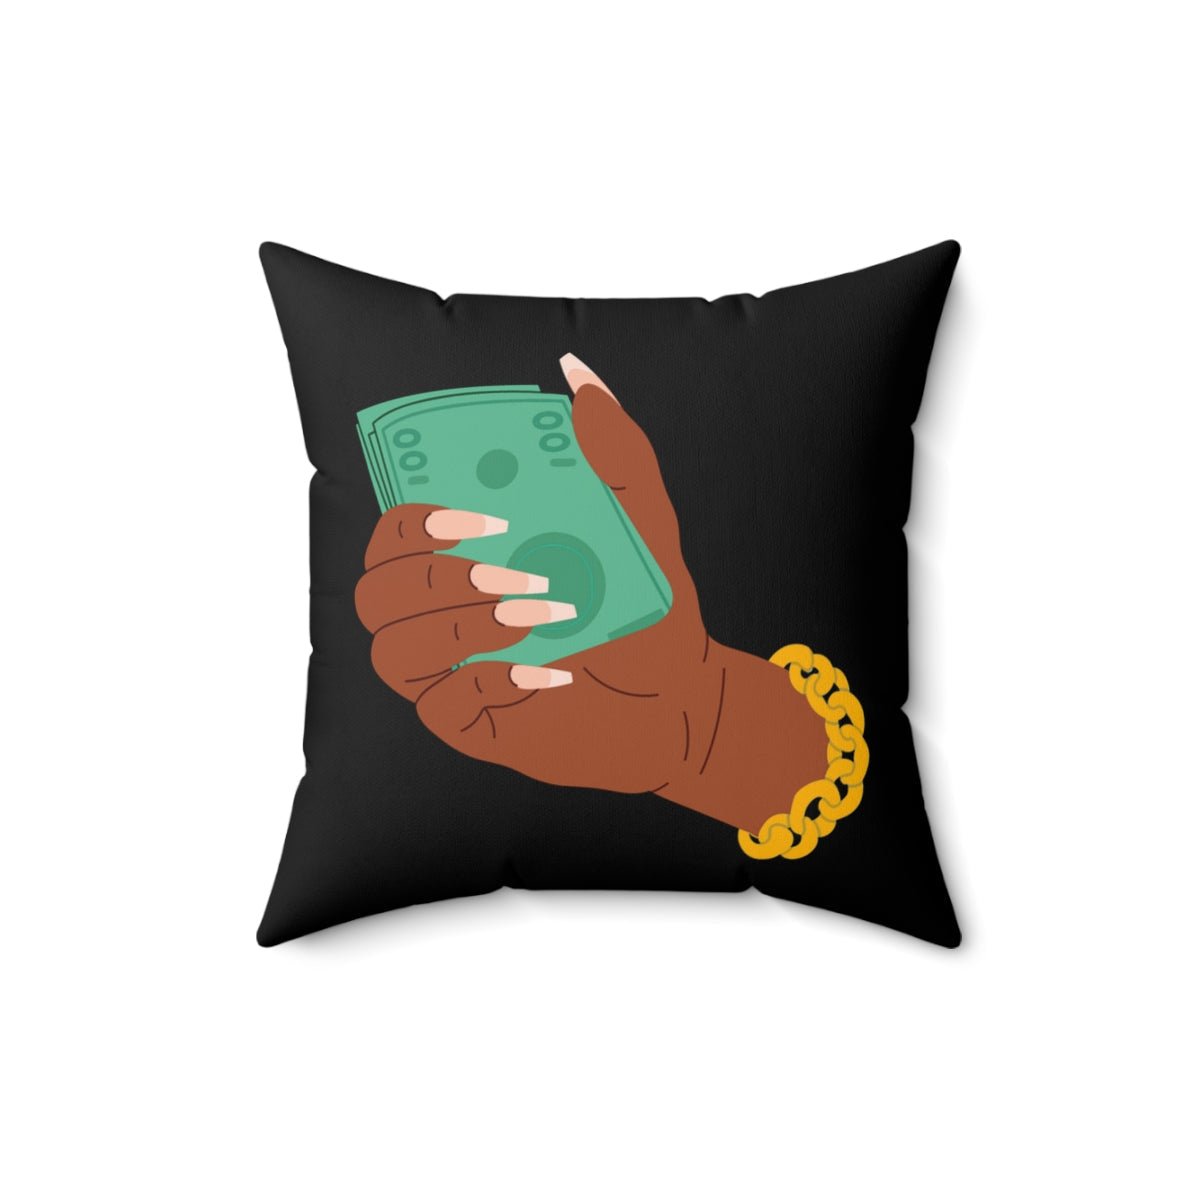 Get Money Pillow - The Trini Gee